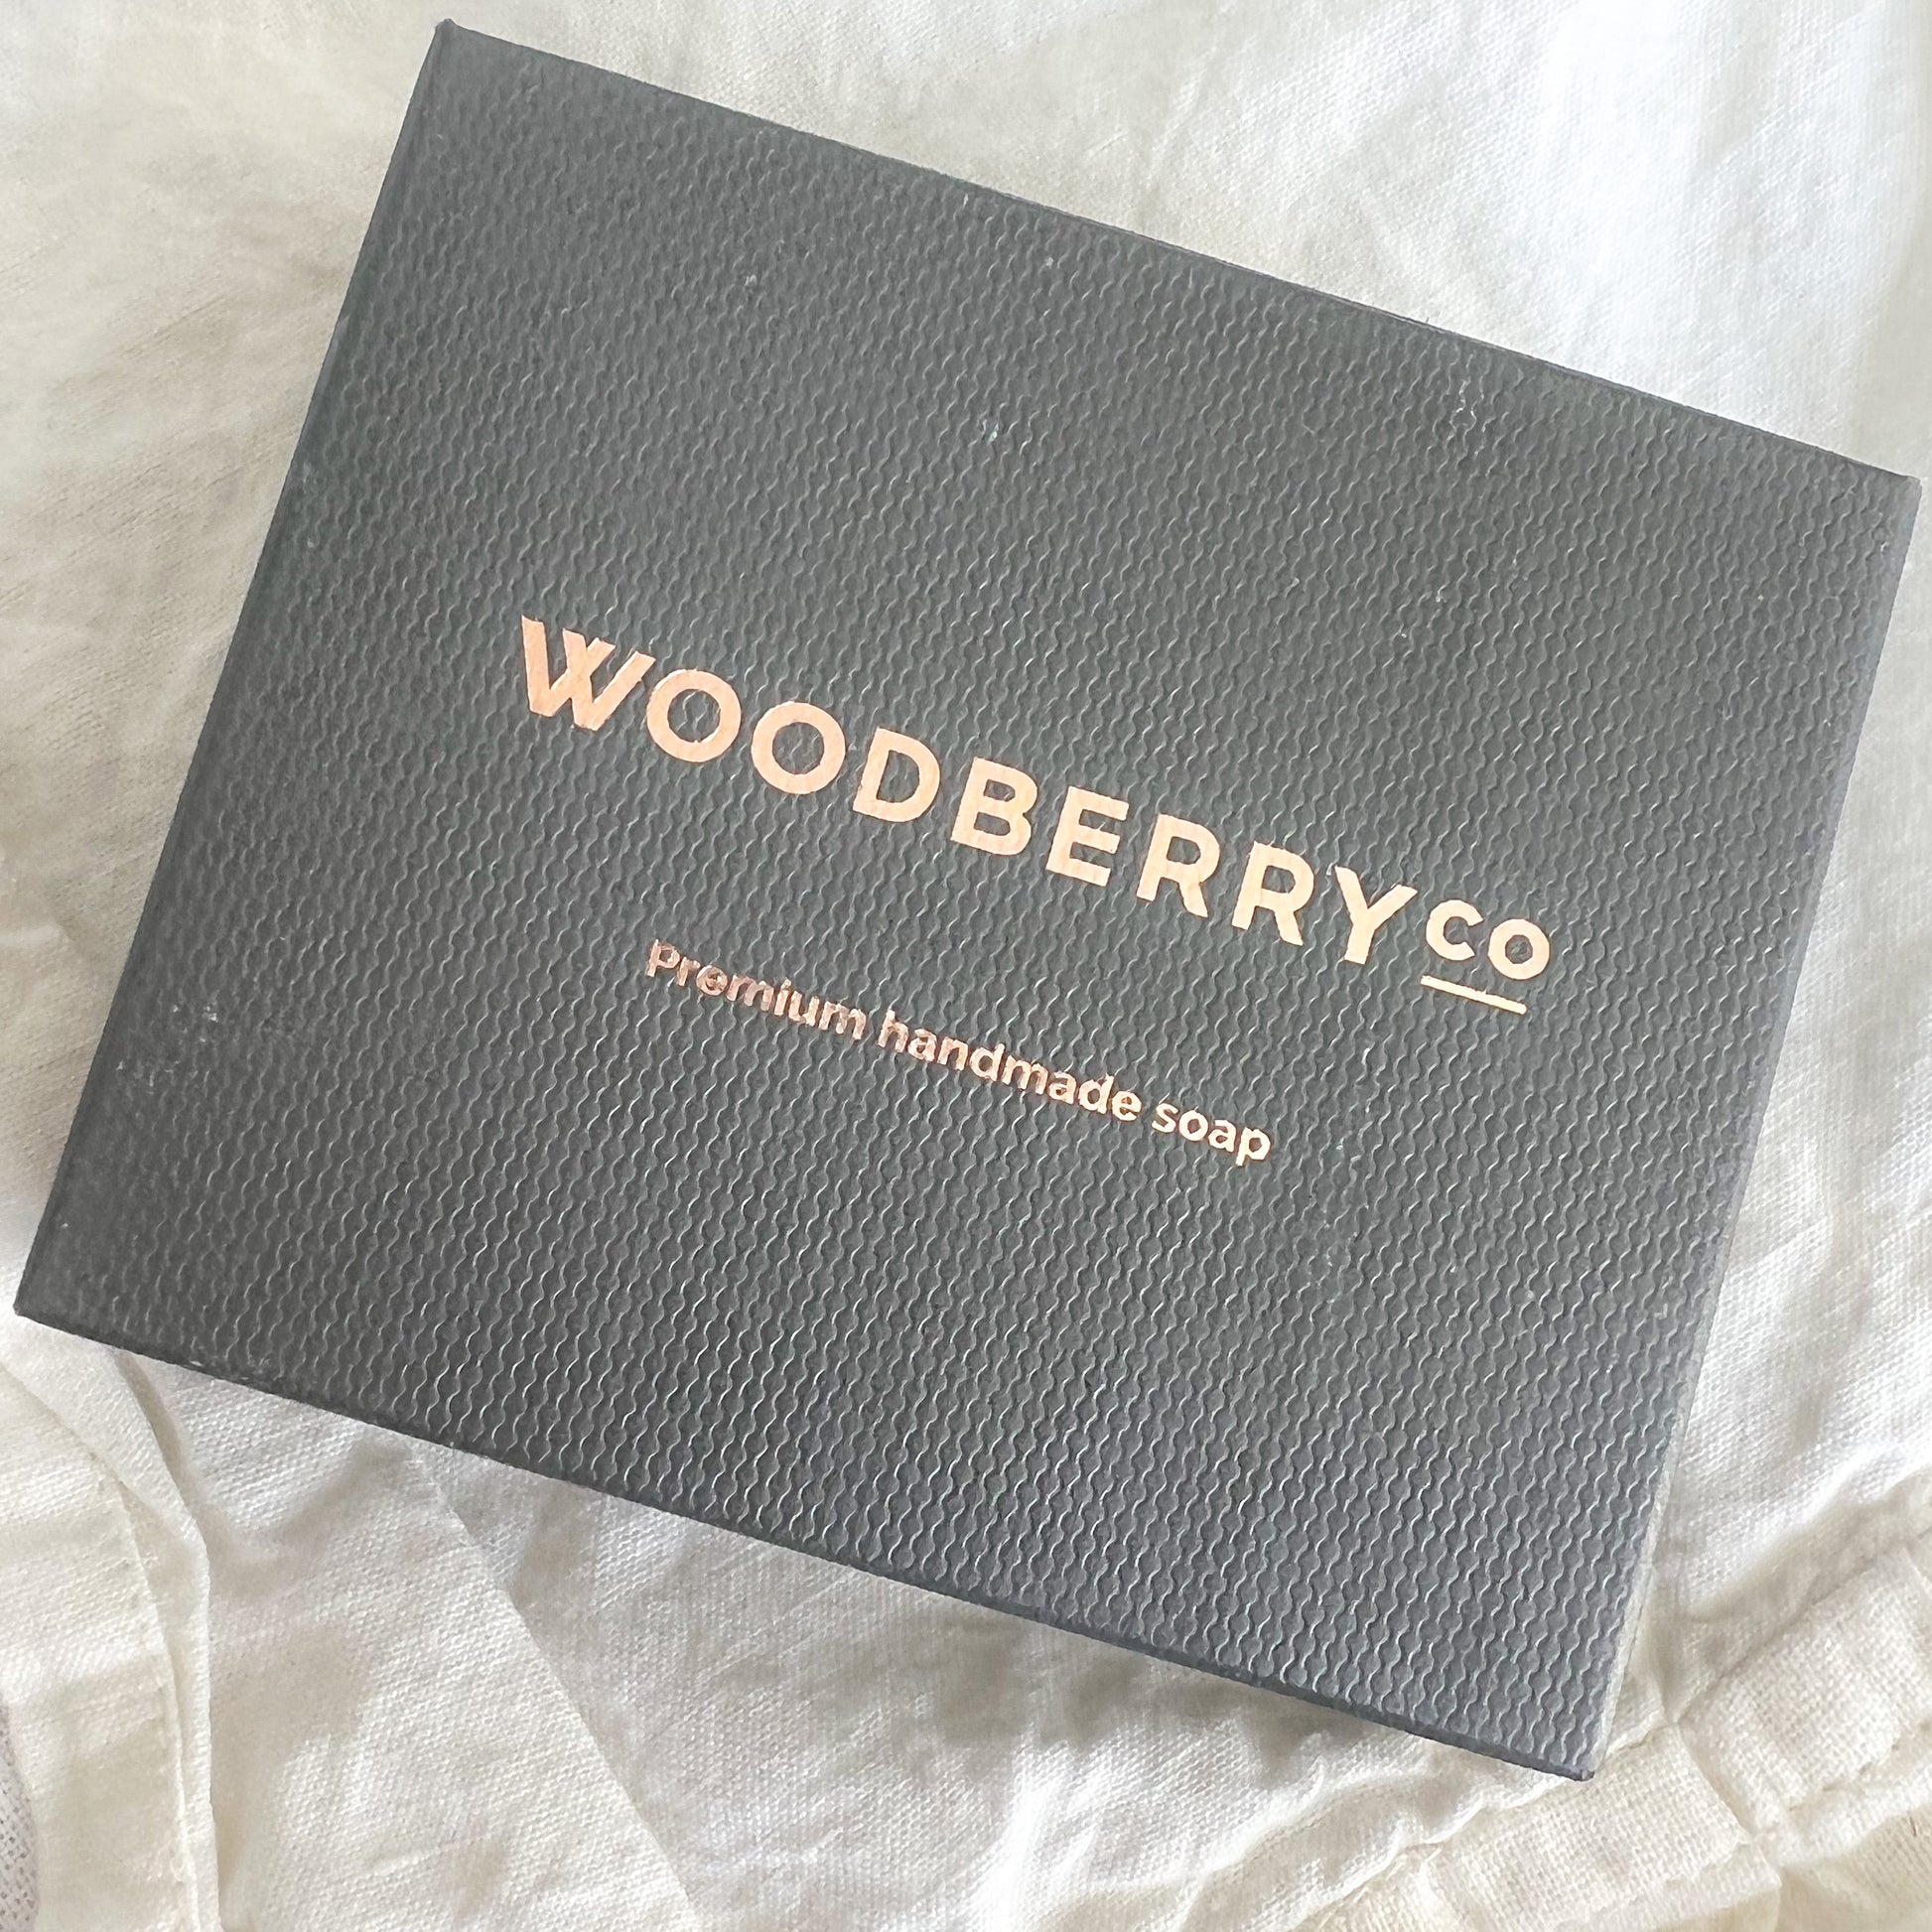 Woodberry Black Jack Premium Bar Soap